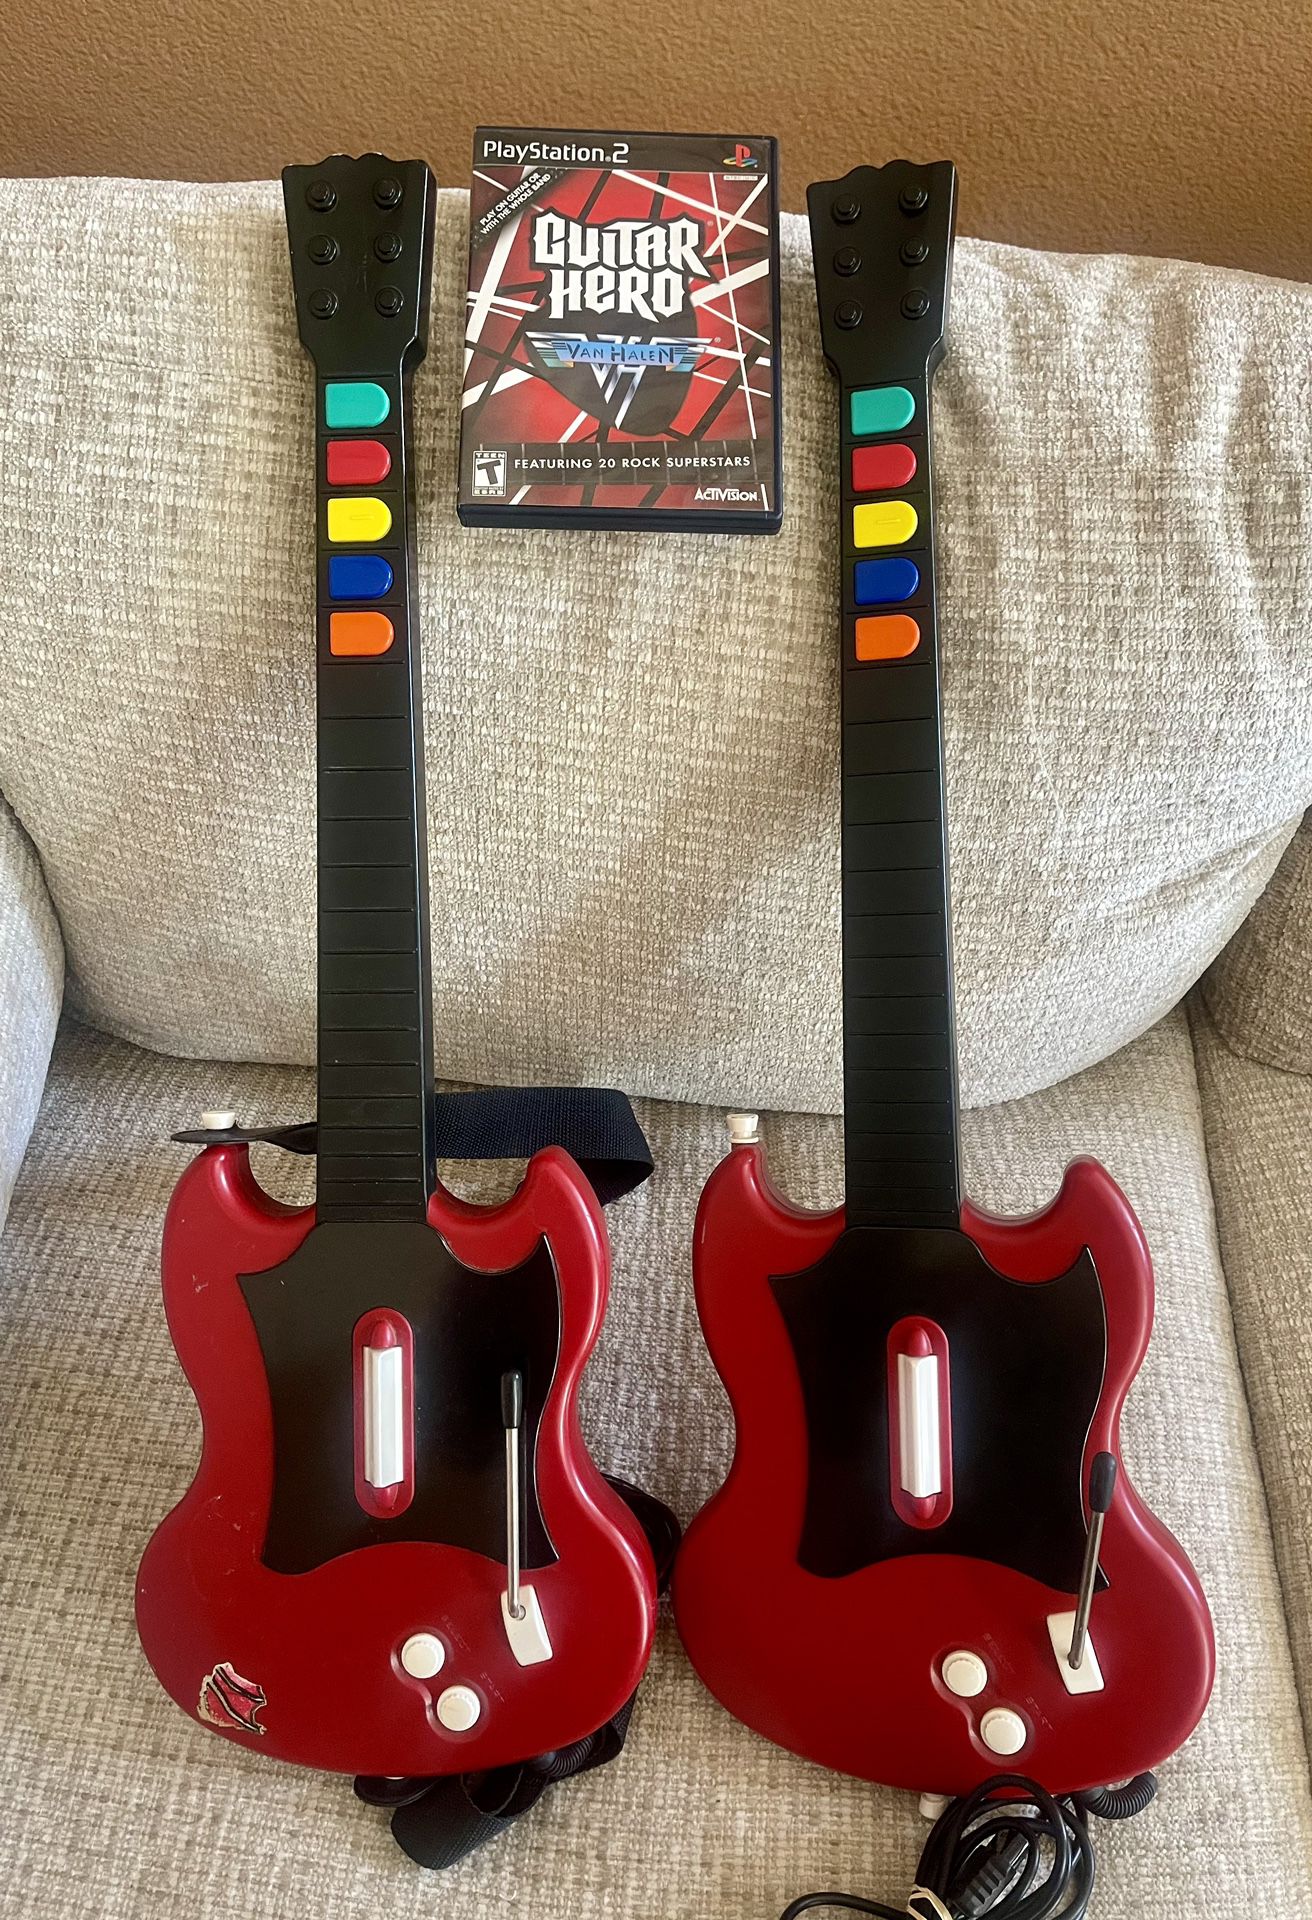 PlayStation 2 - PS2 Guitar Hero Guitars 2 Lot w/ Van Halen